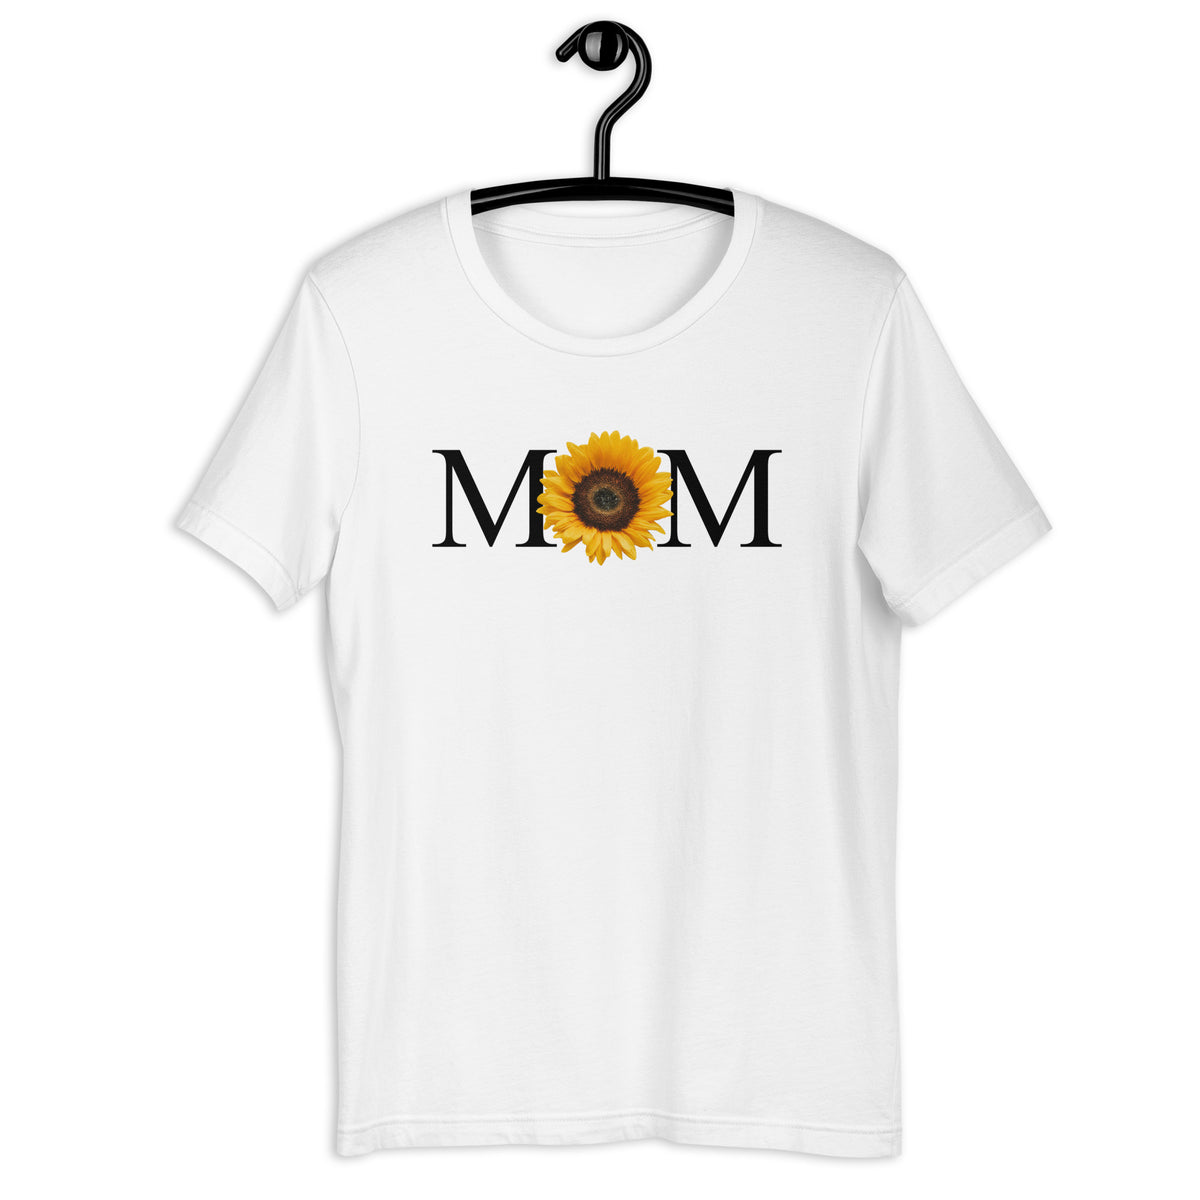 Mom Sunflower t-shirt